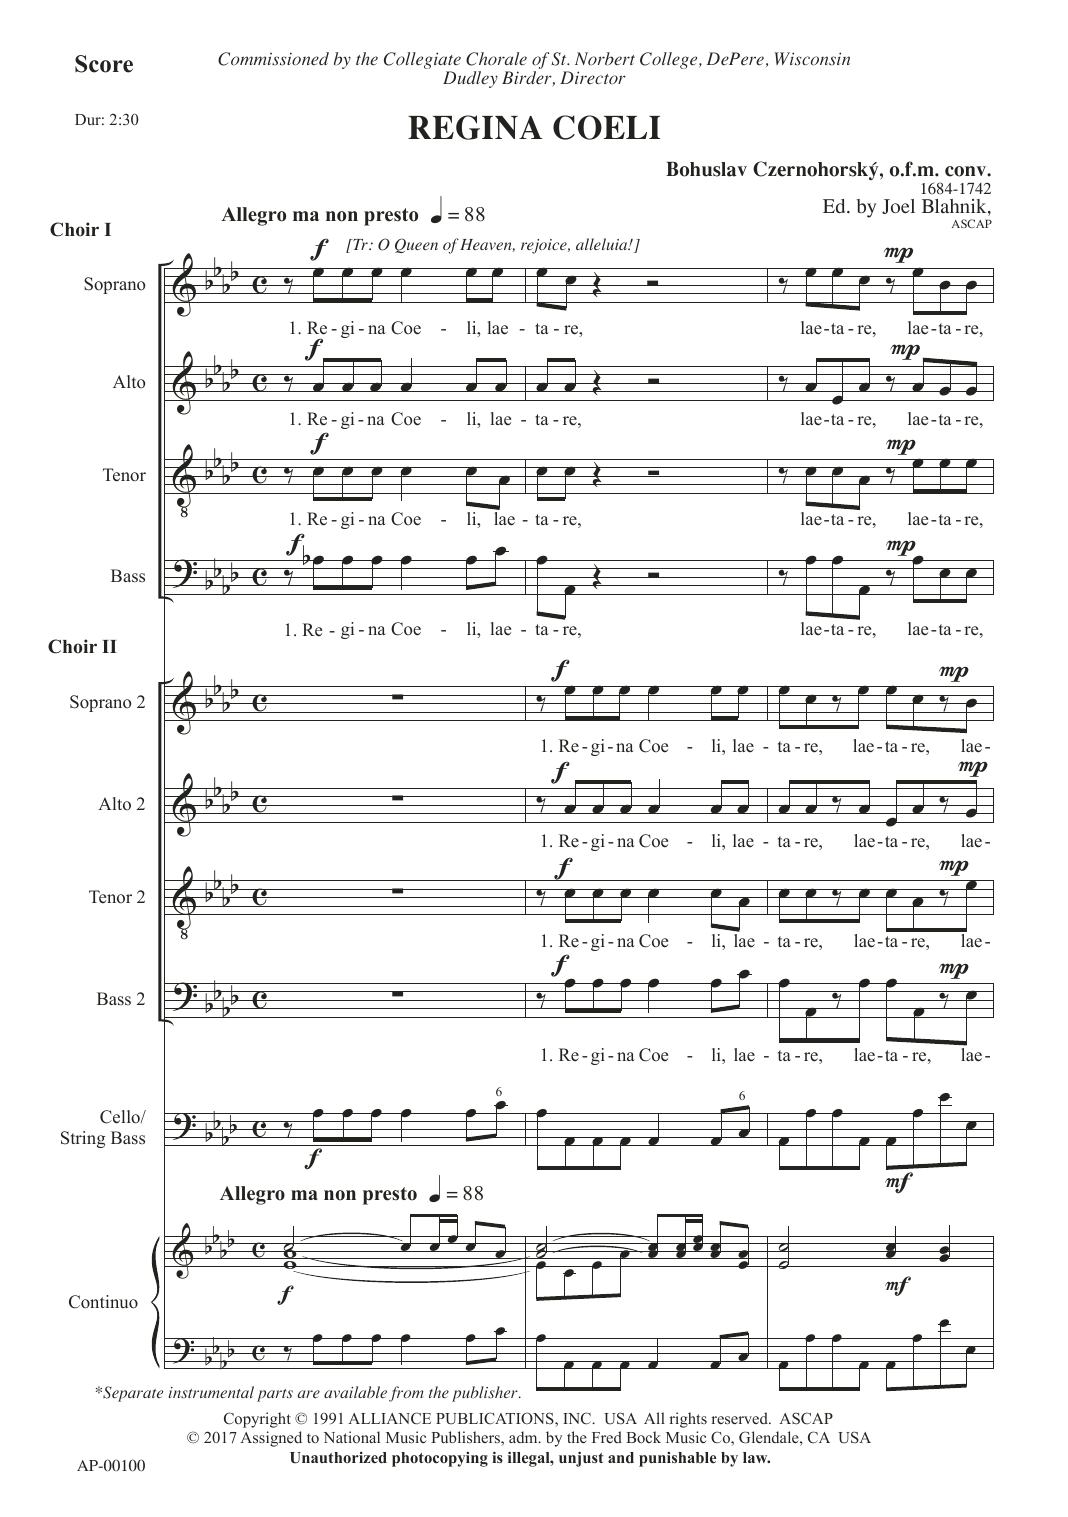 Download Joel Blahnik Regina Coeli Sheet Music and learn how to play SATB Choir PDF digital score in minutes